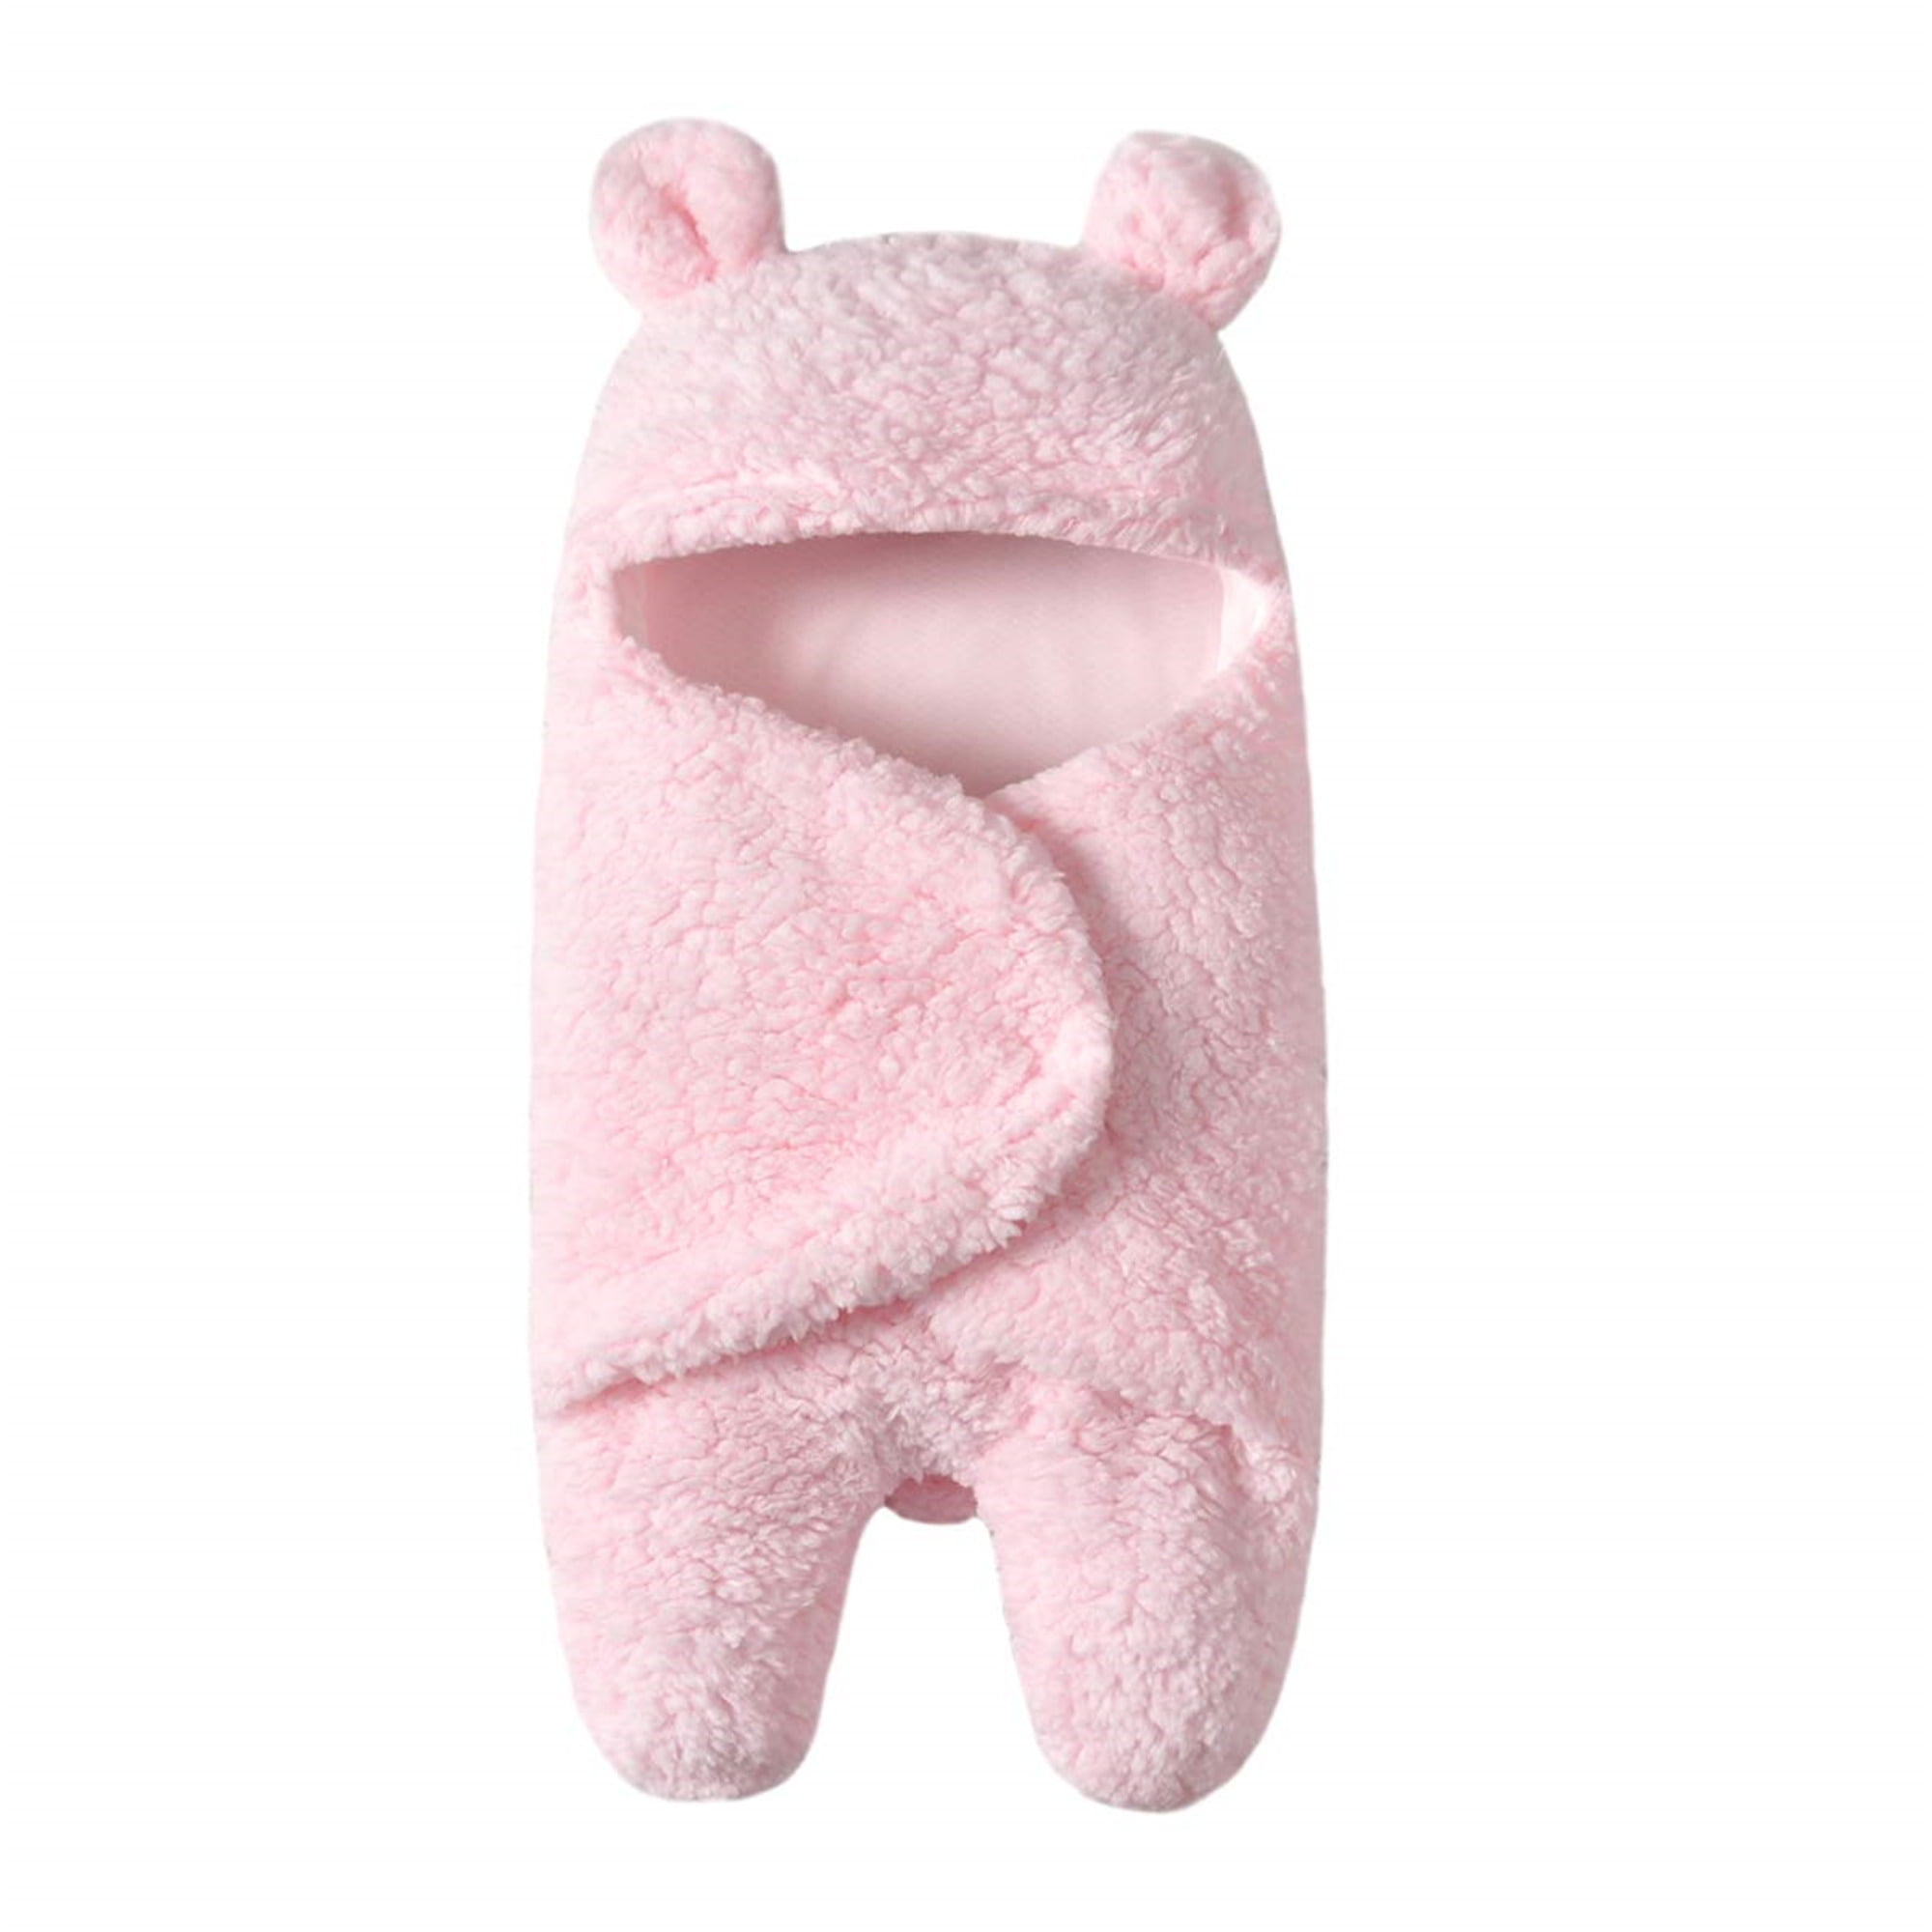 NELNISSA Baby Swaddle Blanket Plush Cute neonato Toddlers Fleece Bedding Wrap Bag Pink 